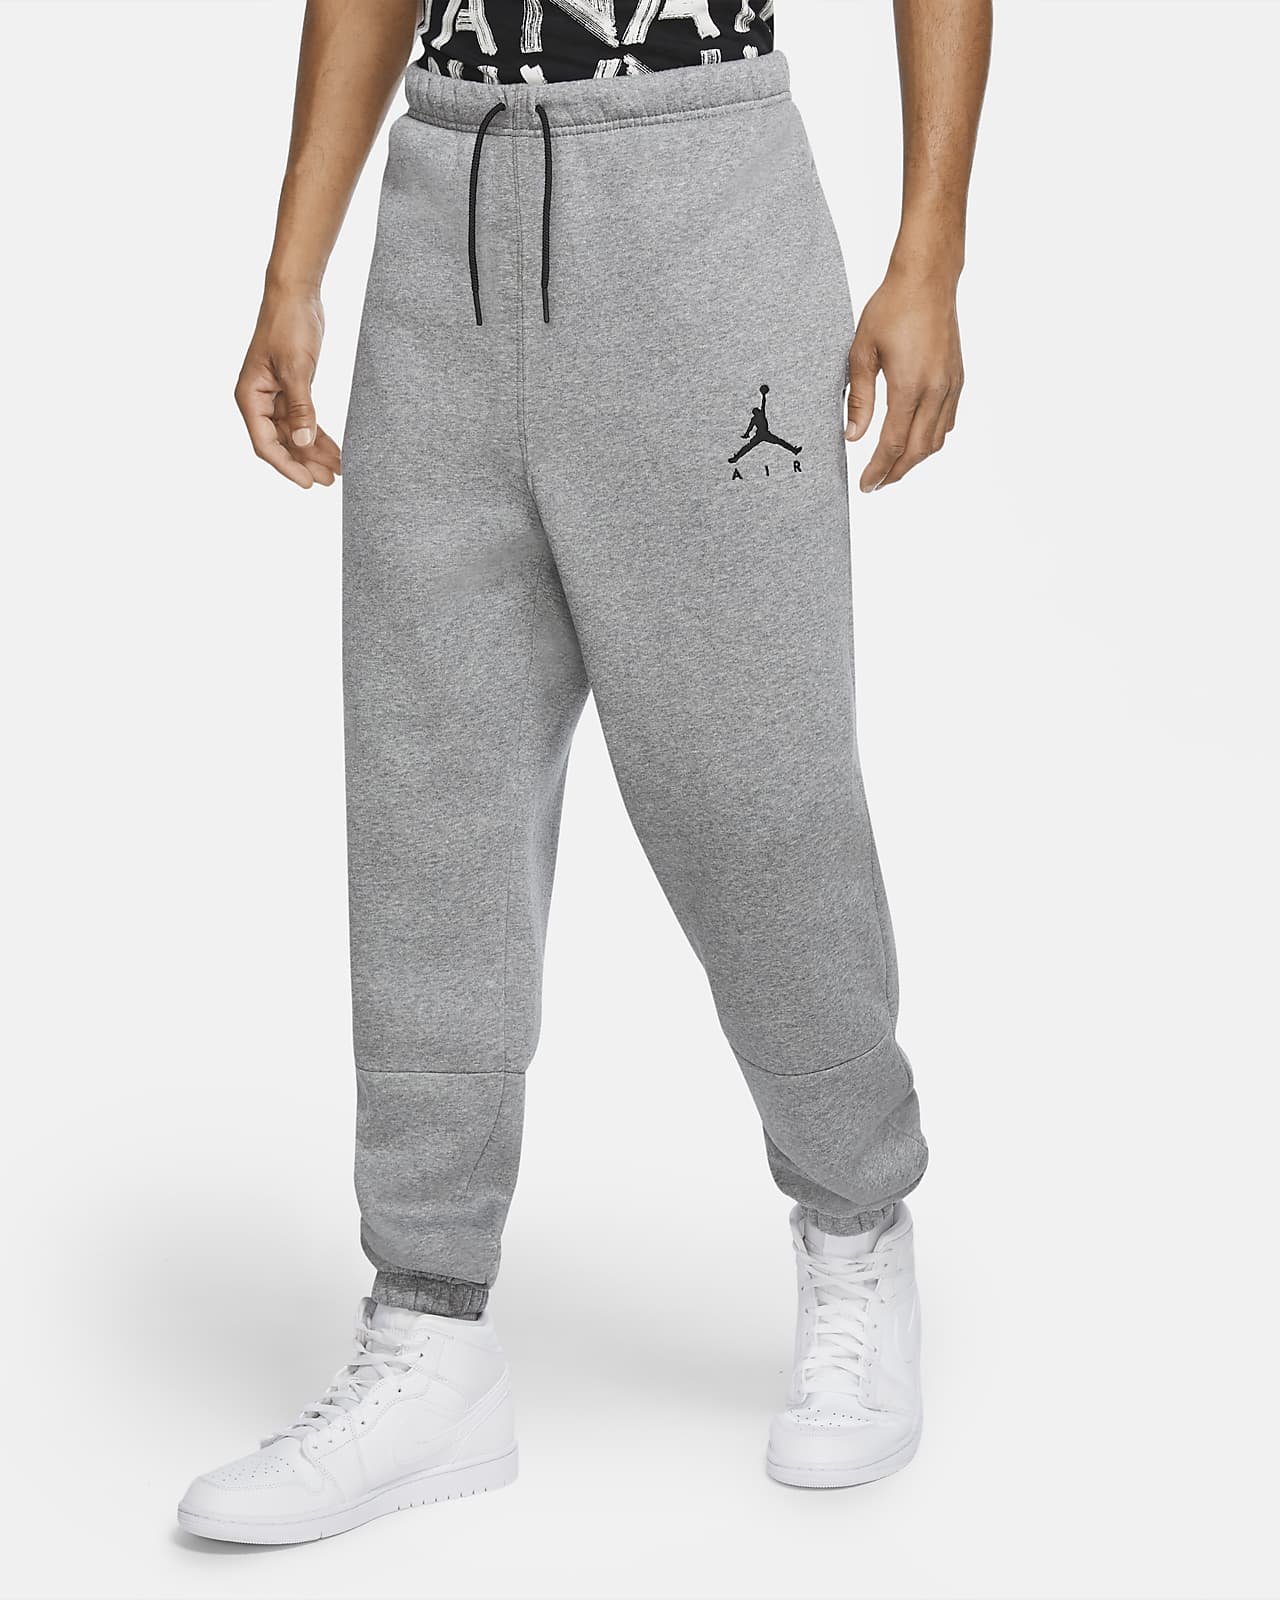 Jordan Jumpman Air Men's Fleece Trousers